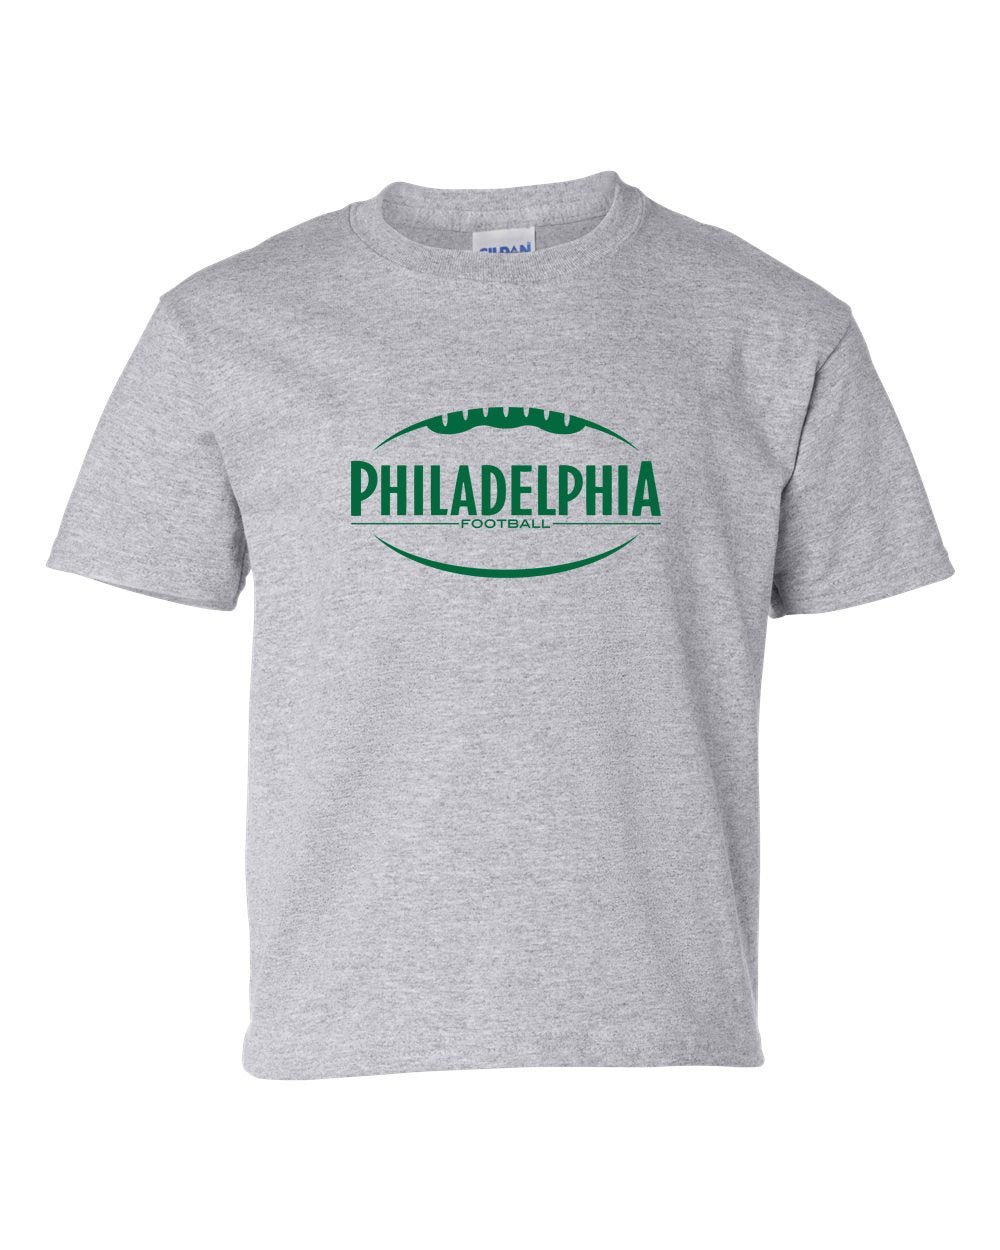 Philadelphia Football KIDS T-Shirt